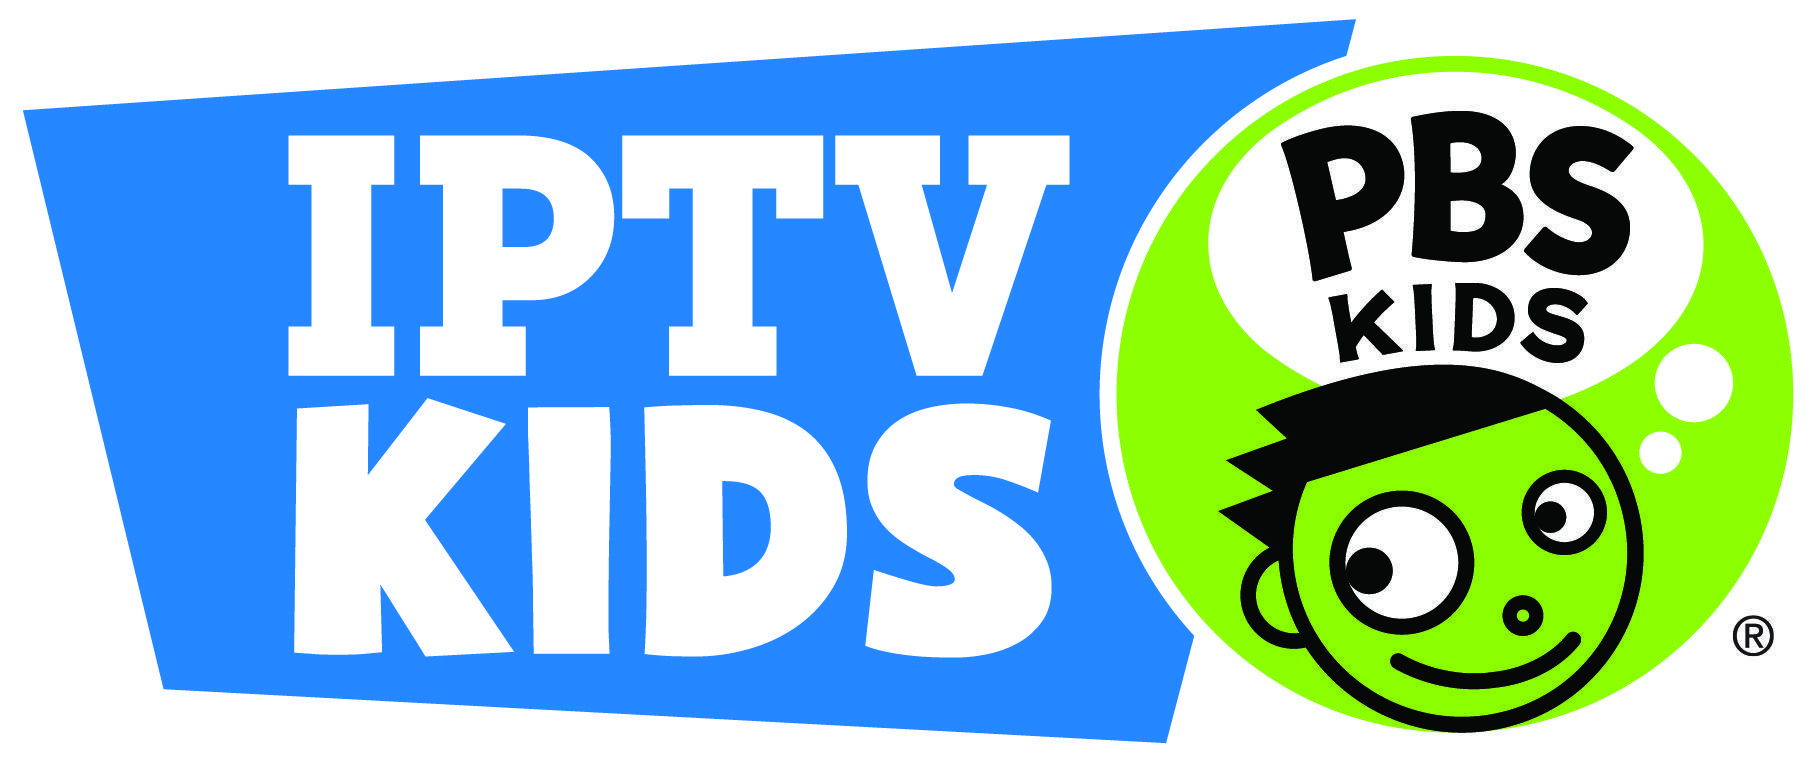 PBS Channel Logo - IPTV Channel Logos | IPTV